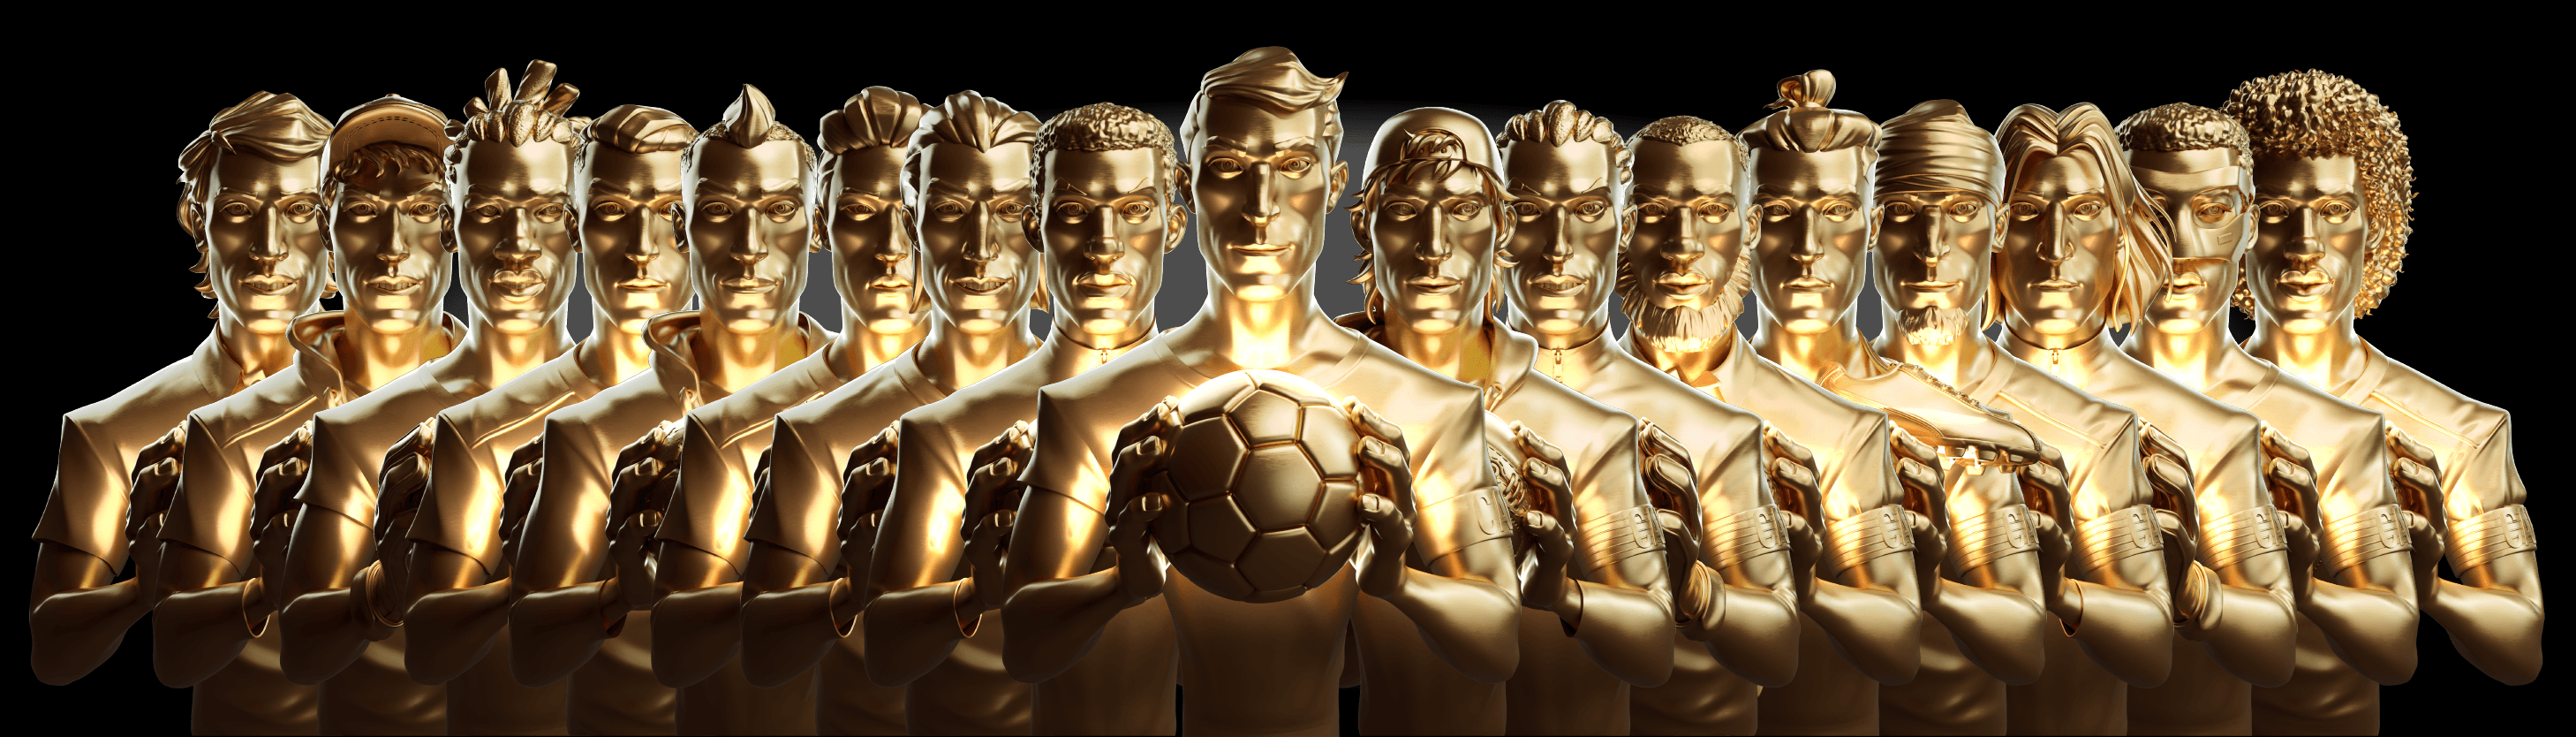 World of Football Golden Captains